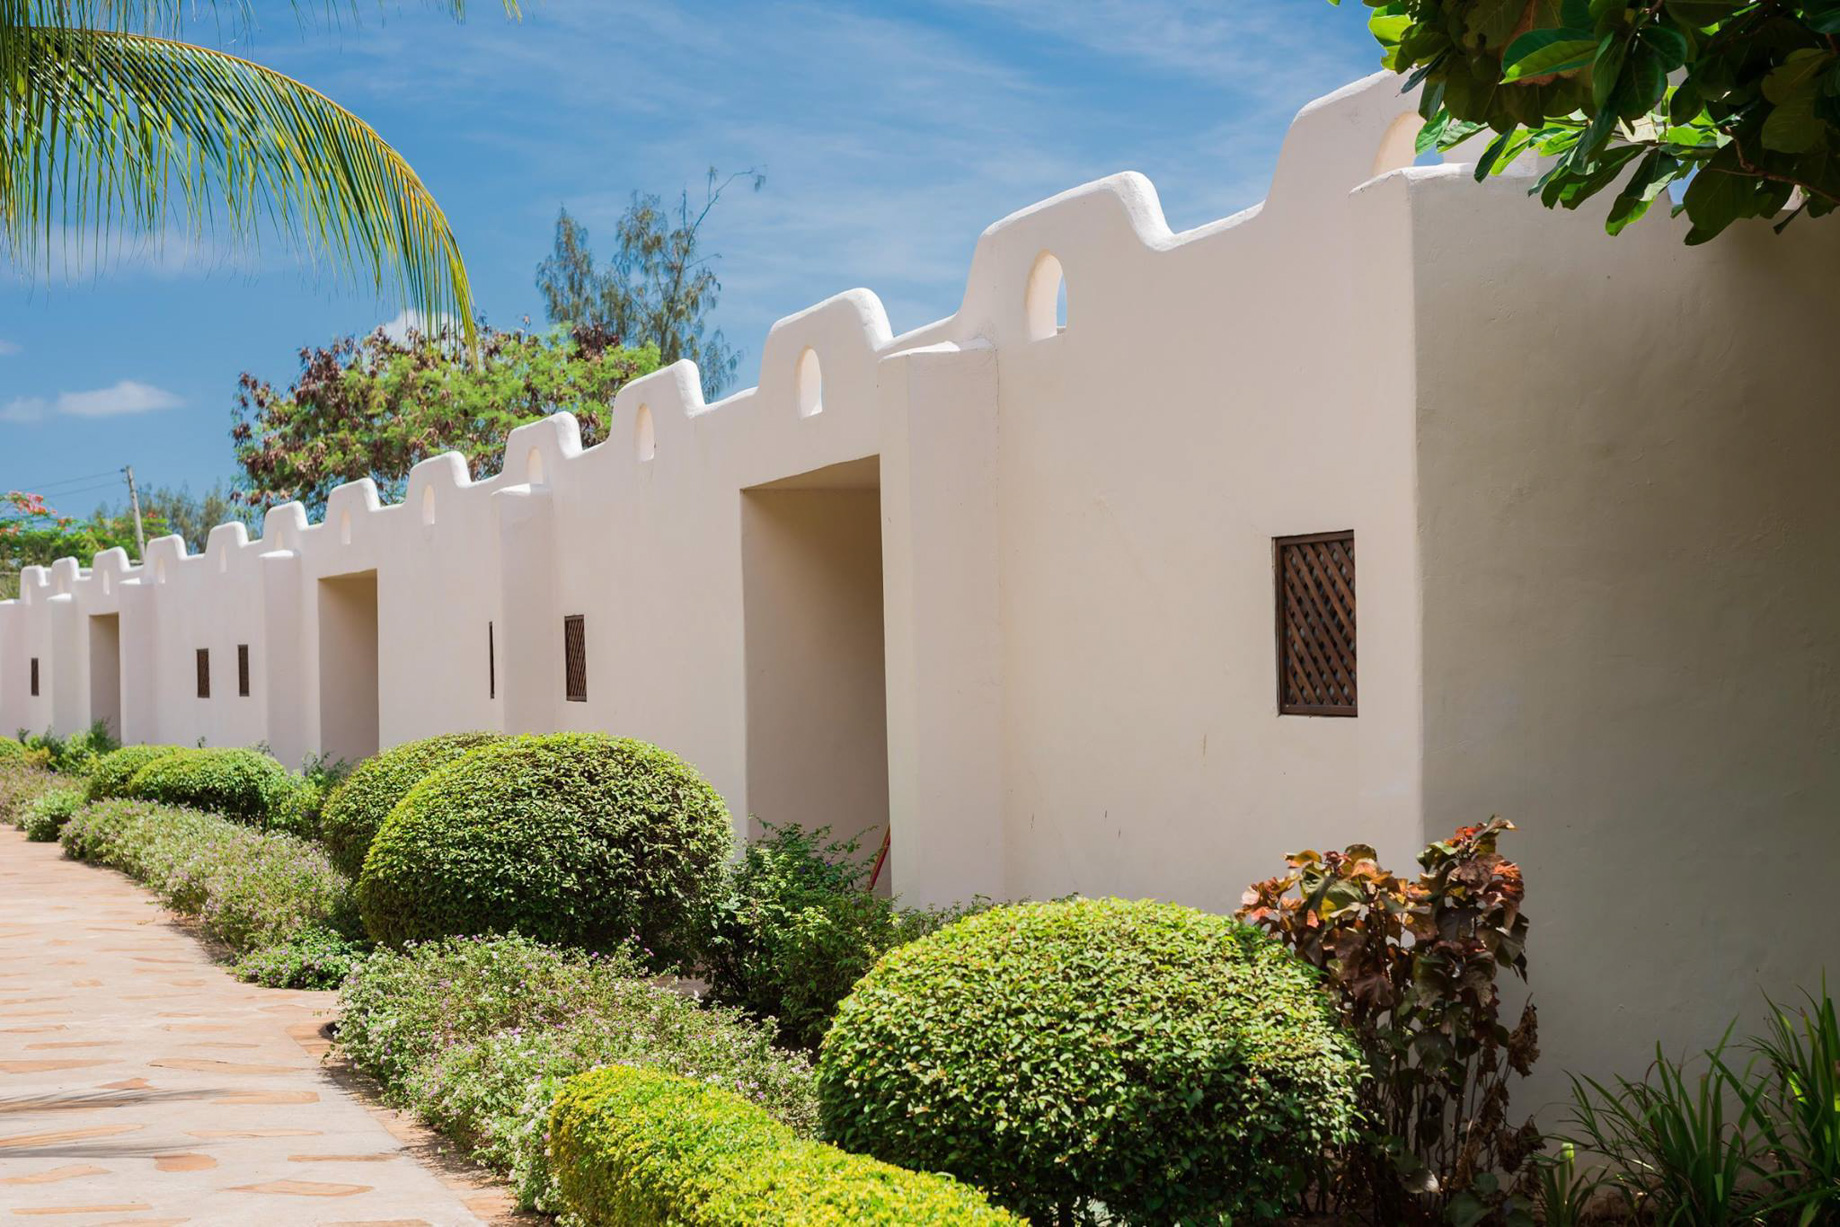 Gold Zanzibar Beach House & Spa Resort - Nungwi, Zanzibar, Tanzania - Accommodations